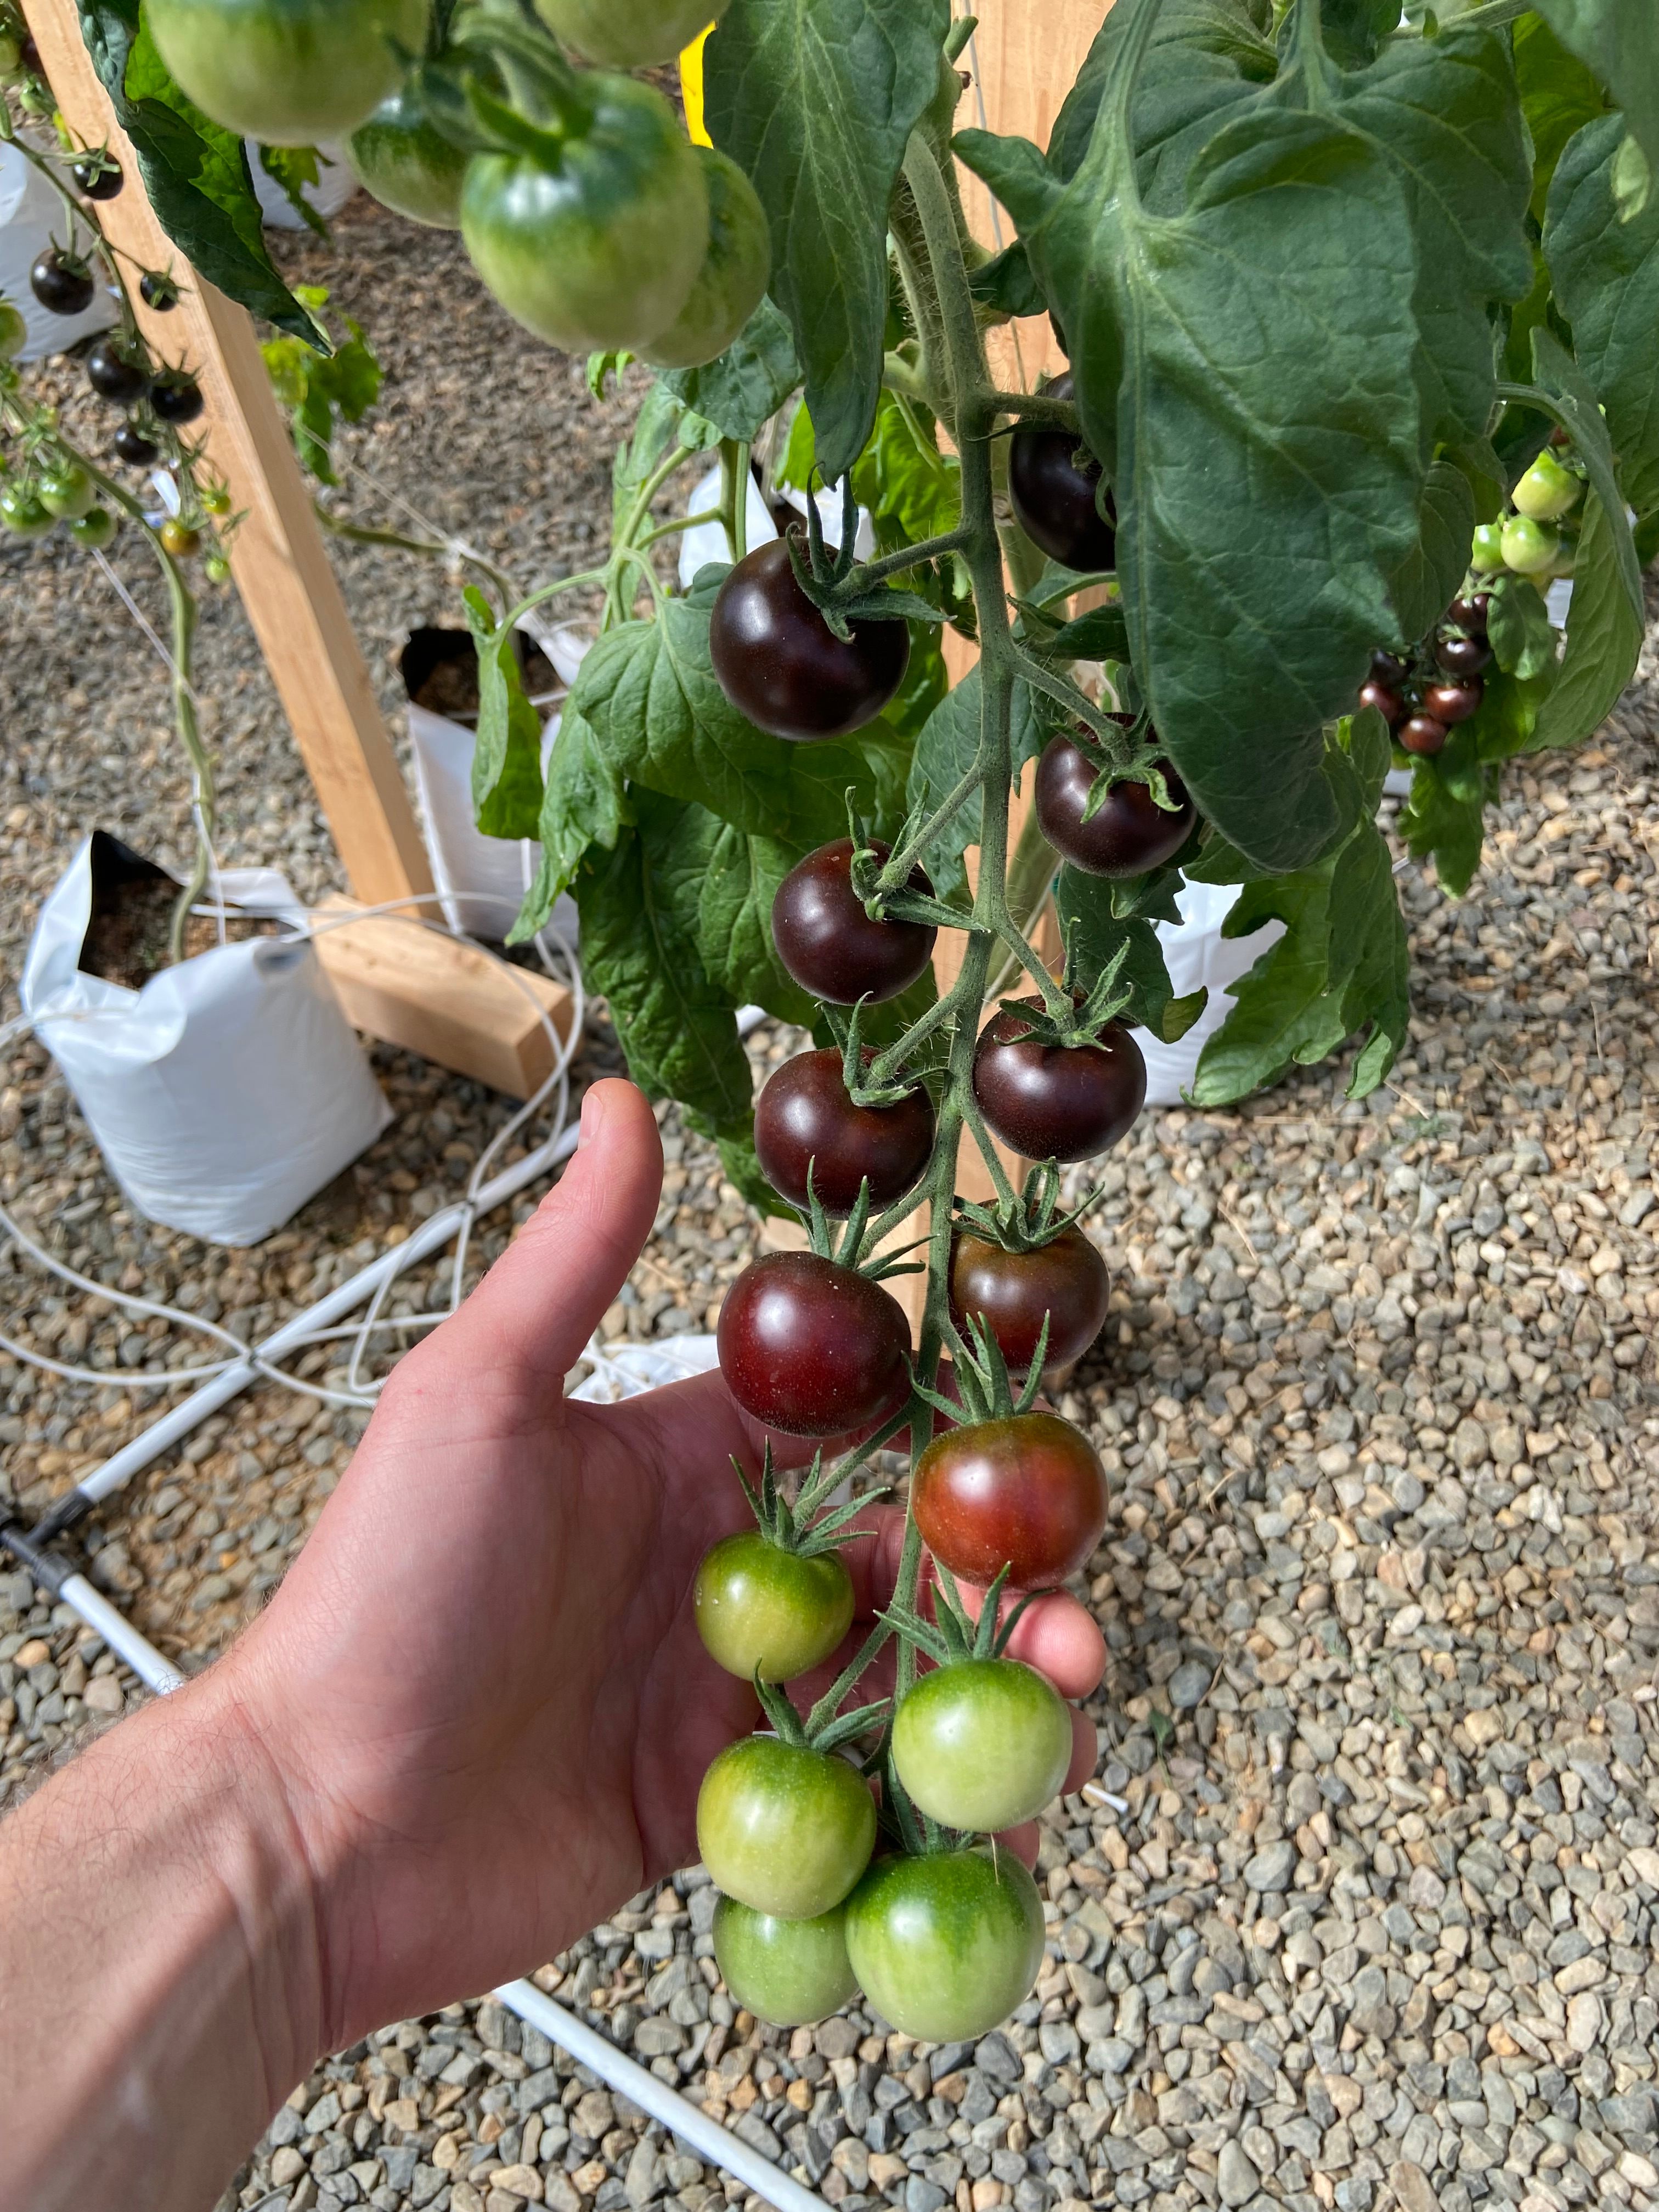 Purple Tomatoes ripen on the vine.